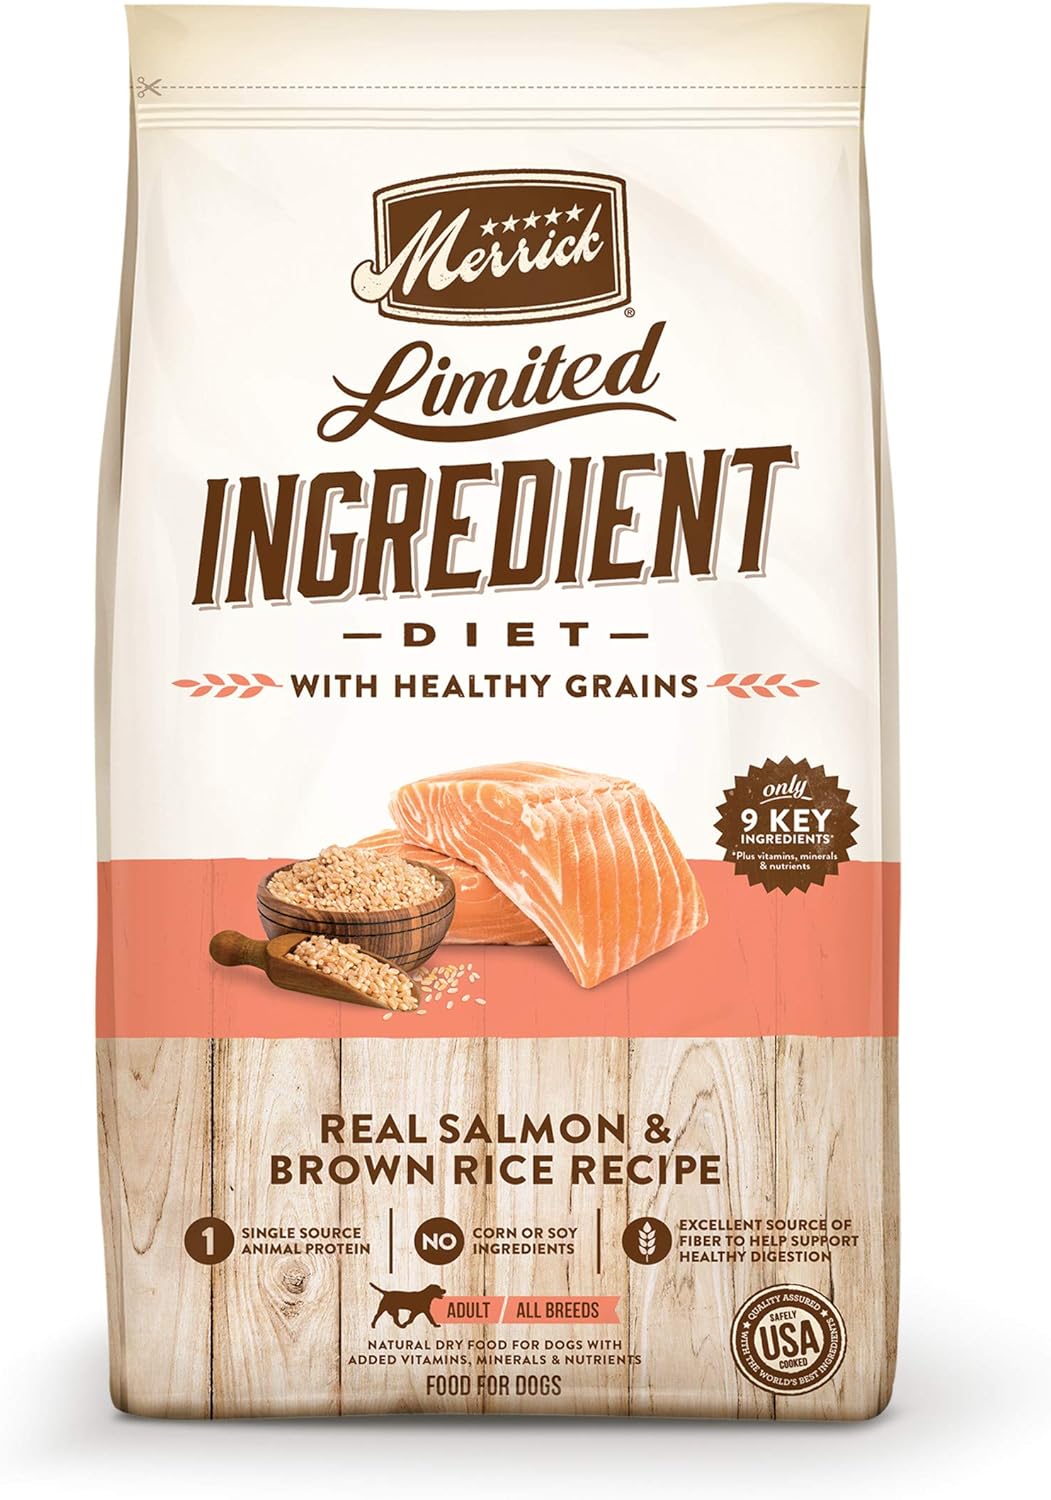 Merrick Limited Ingredient Diet with Healthy Grains